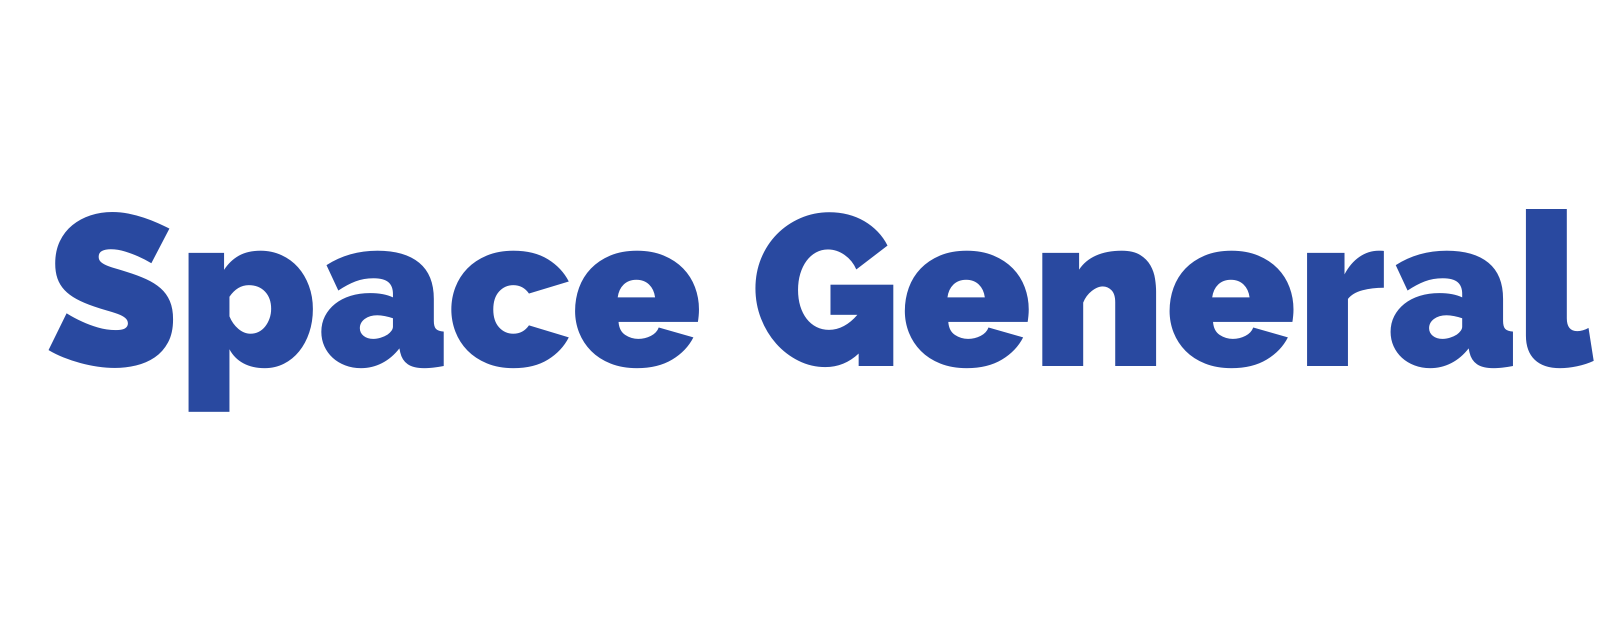 Space General logo